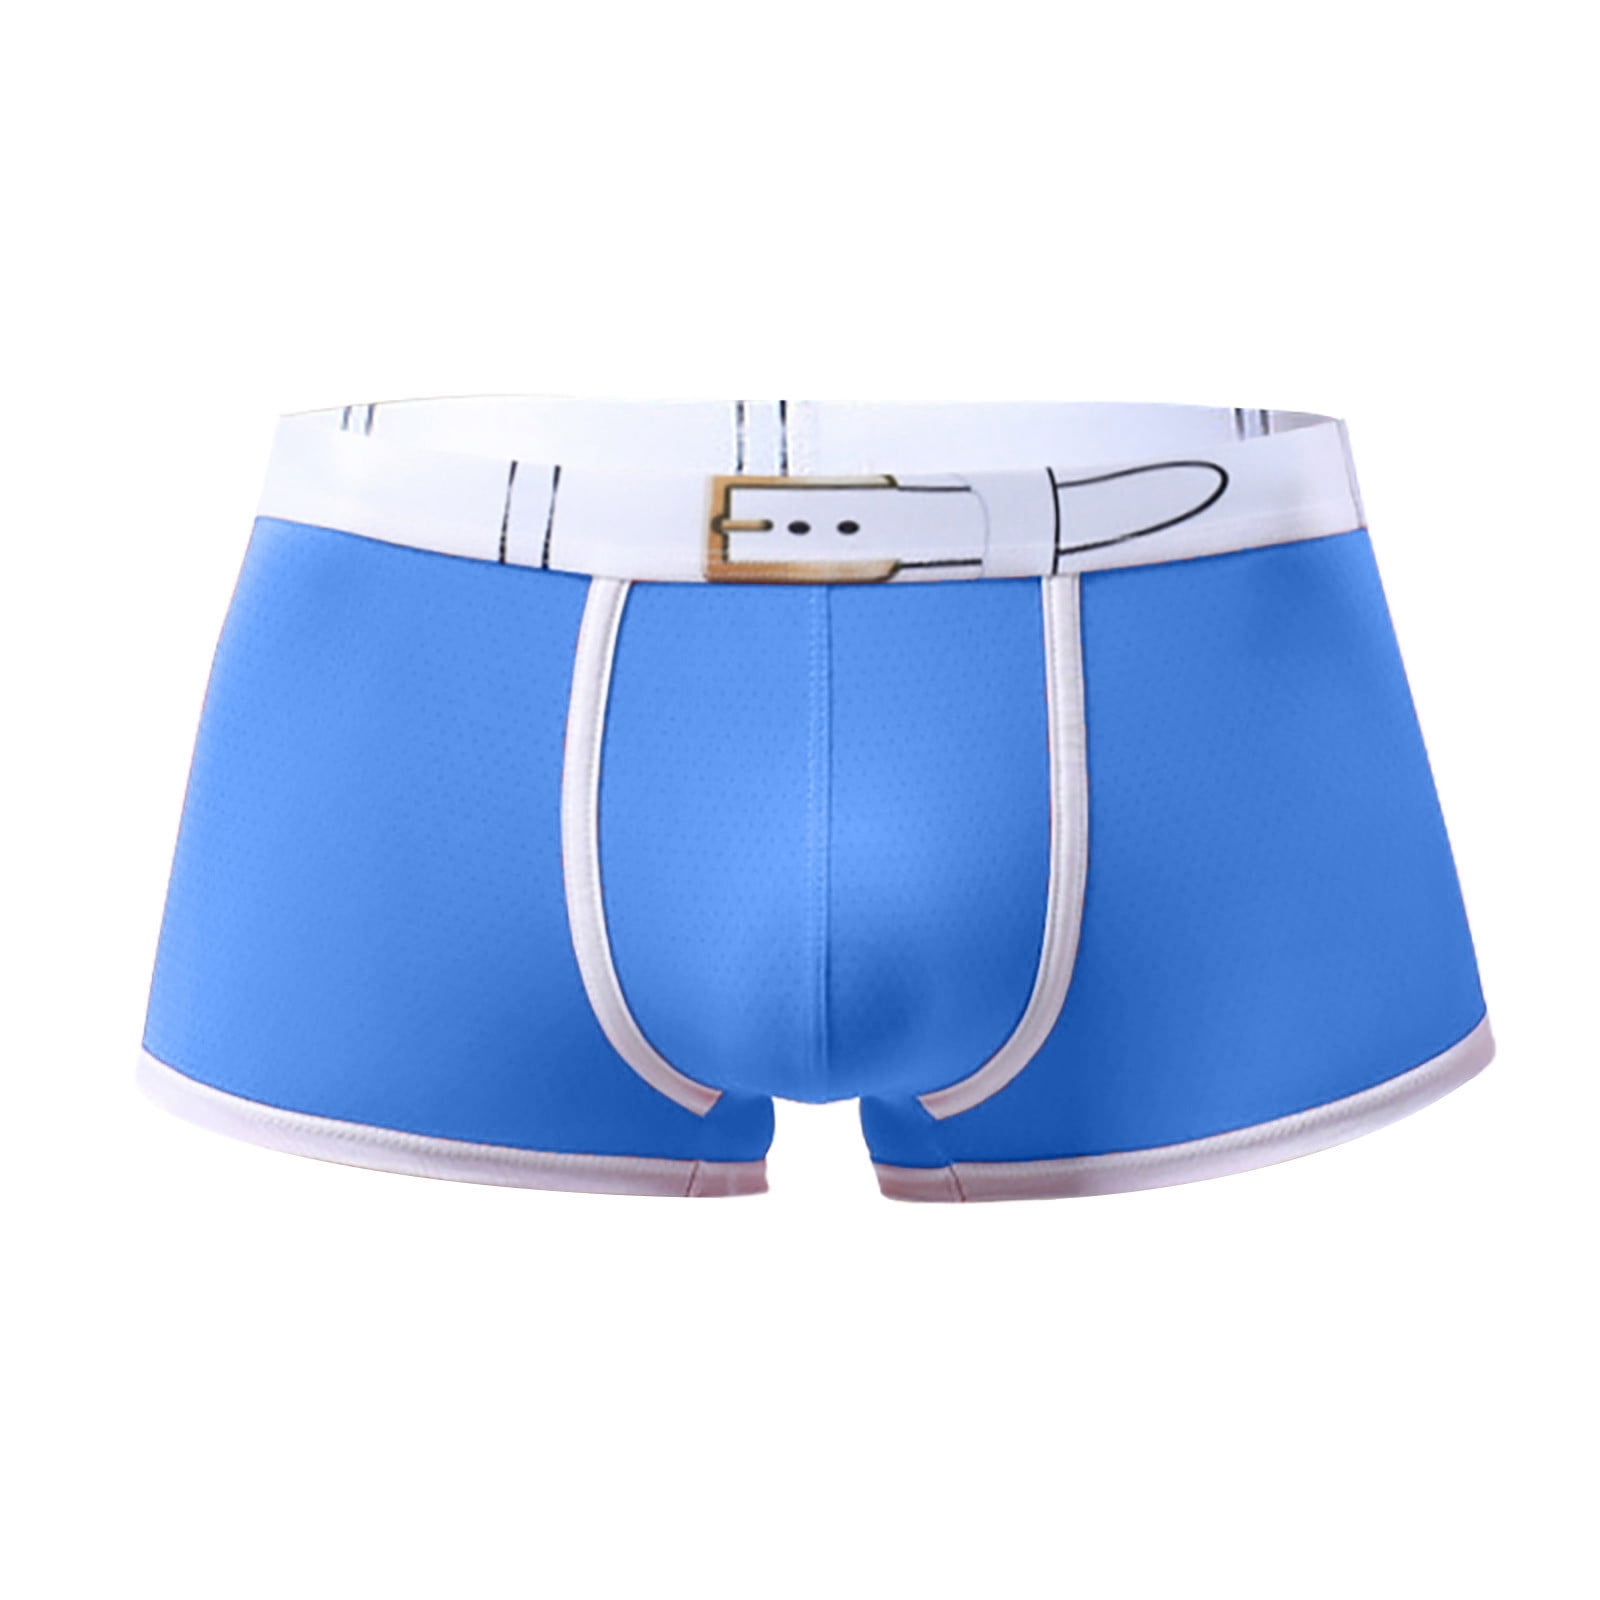 Entyinea Men's Big and Tall Underwear Breathable Low Rise Mesh Trunks  Underwear,Blue XL